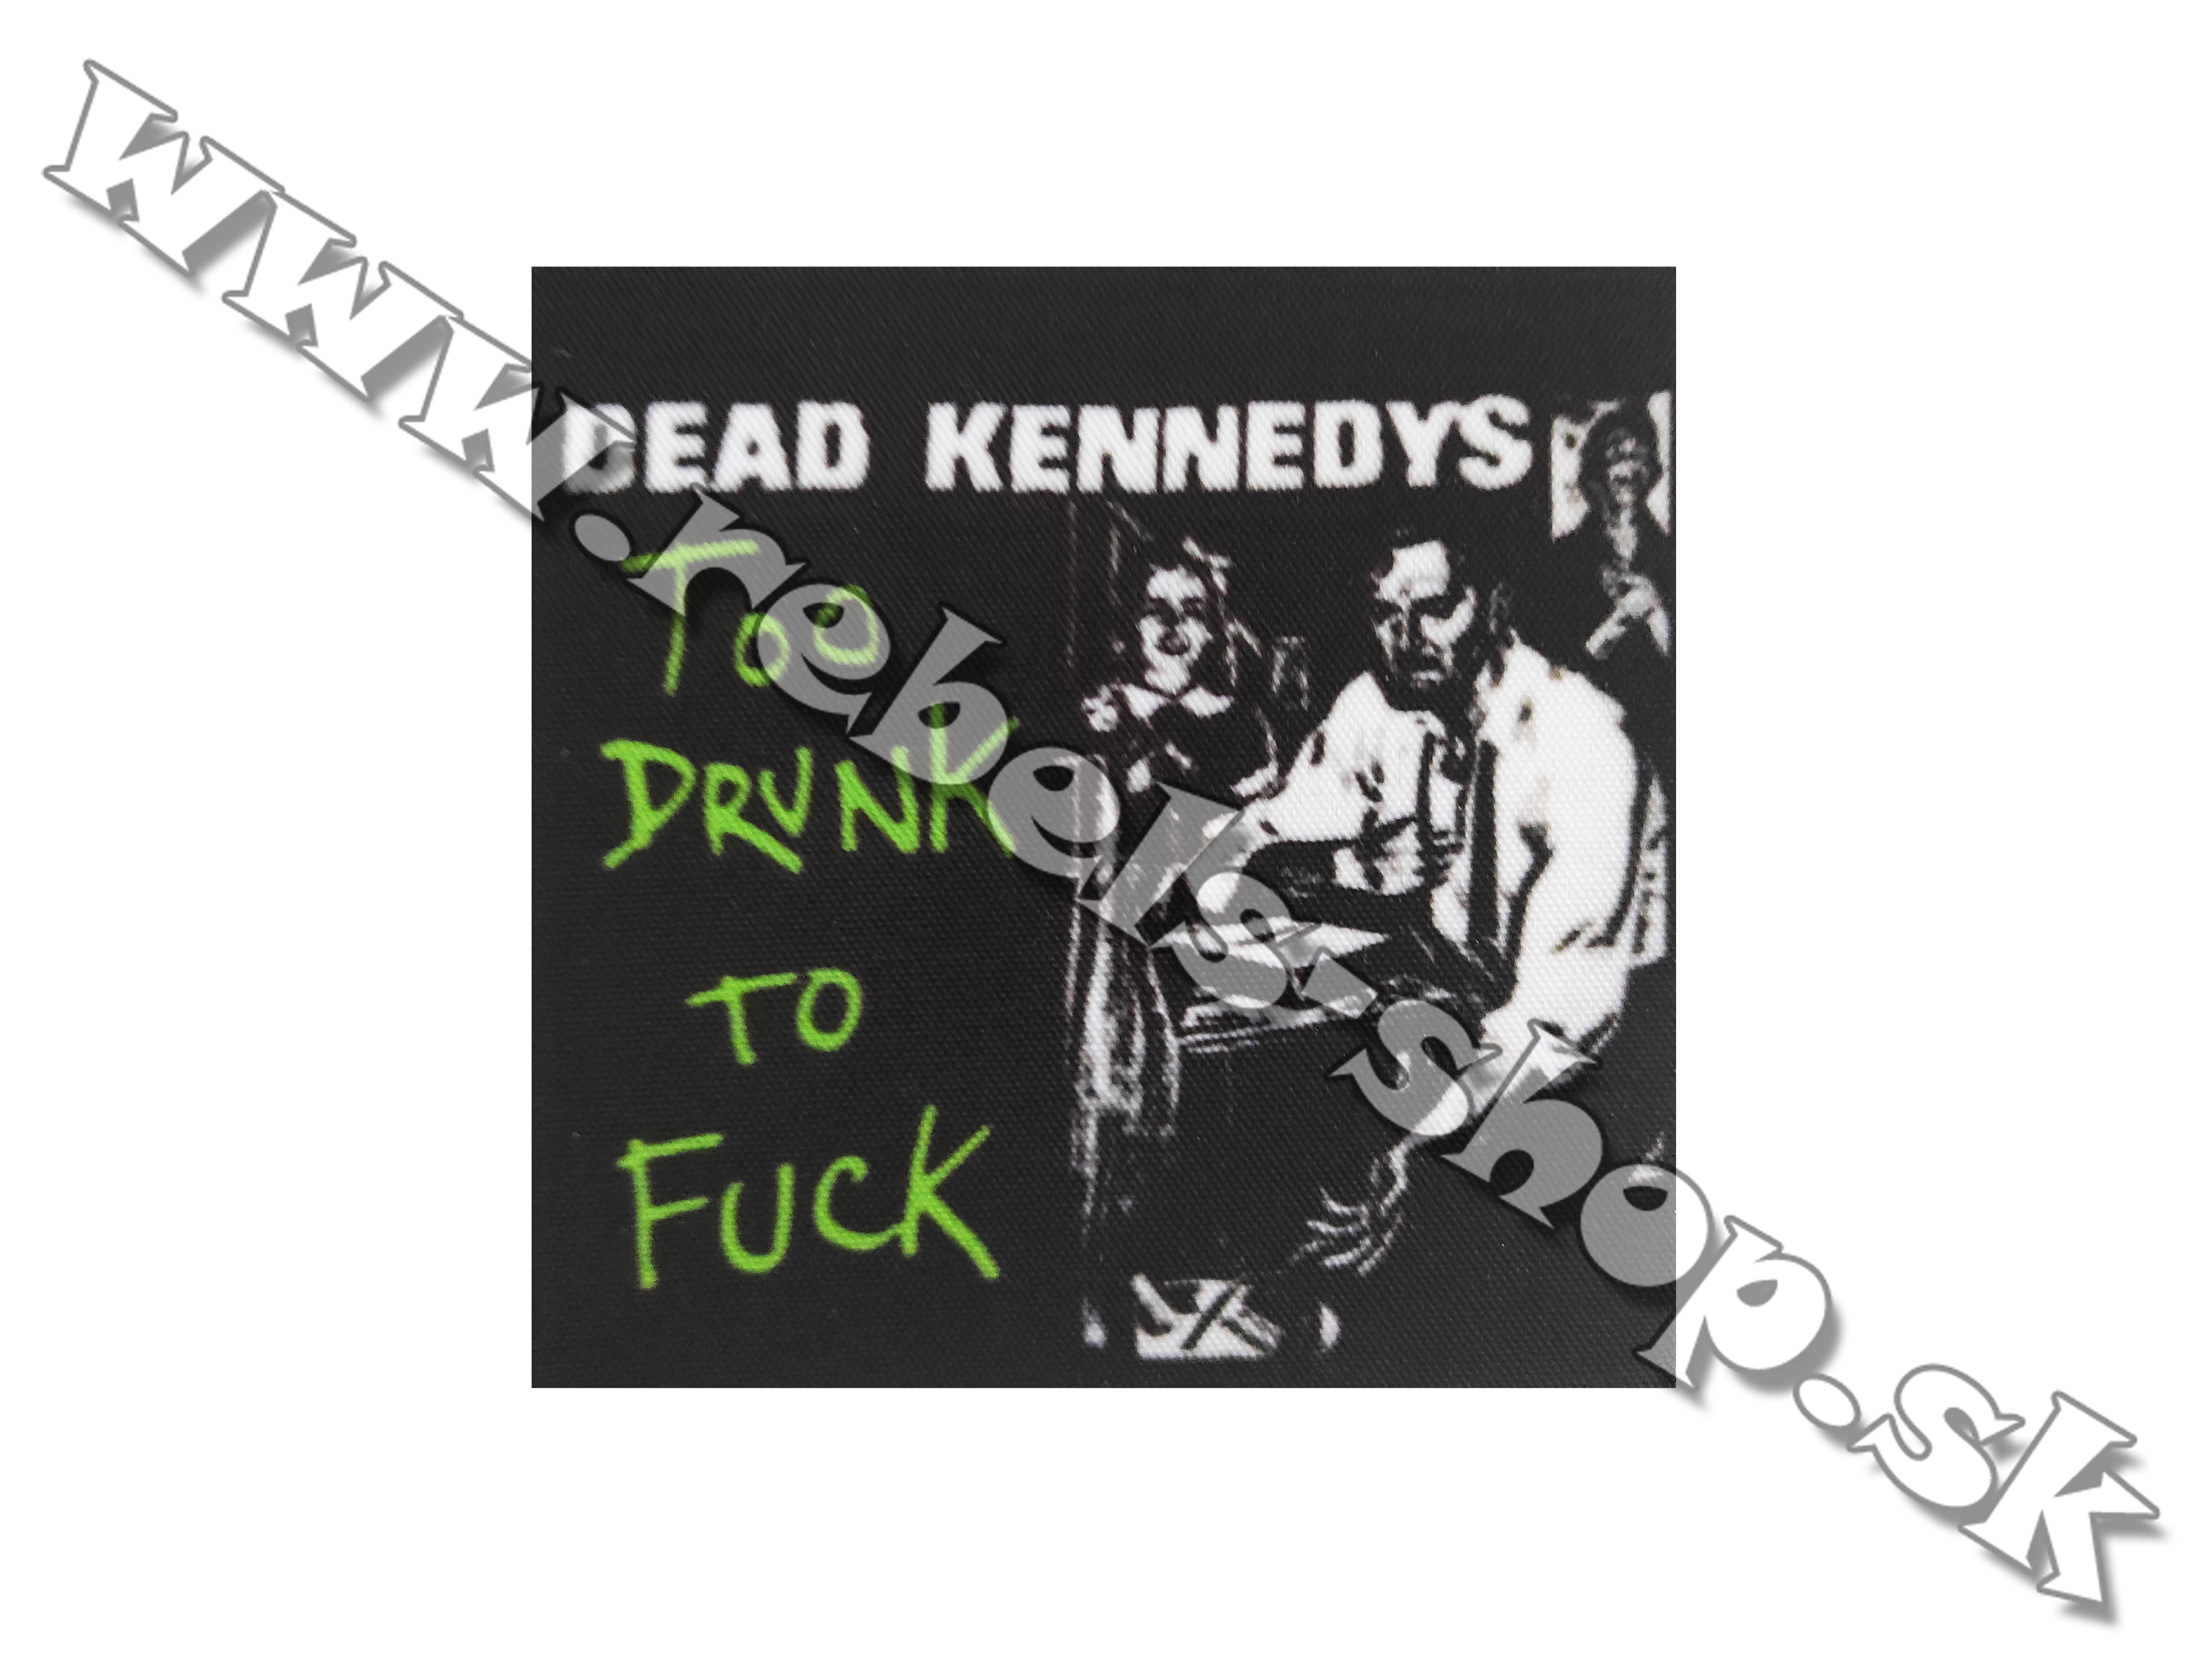 Nášivka "Dead Kennedys"